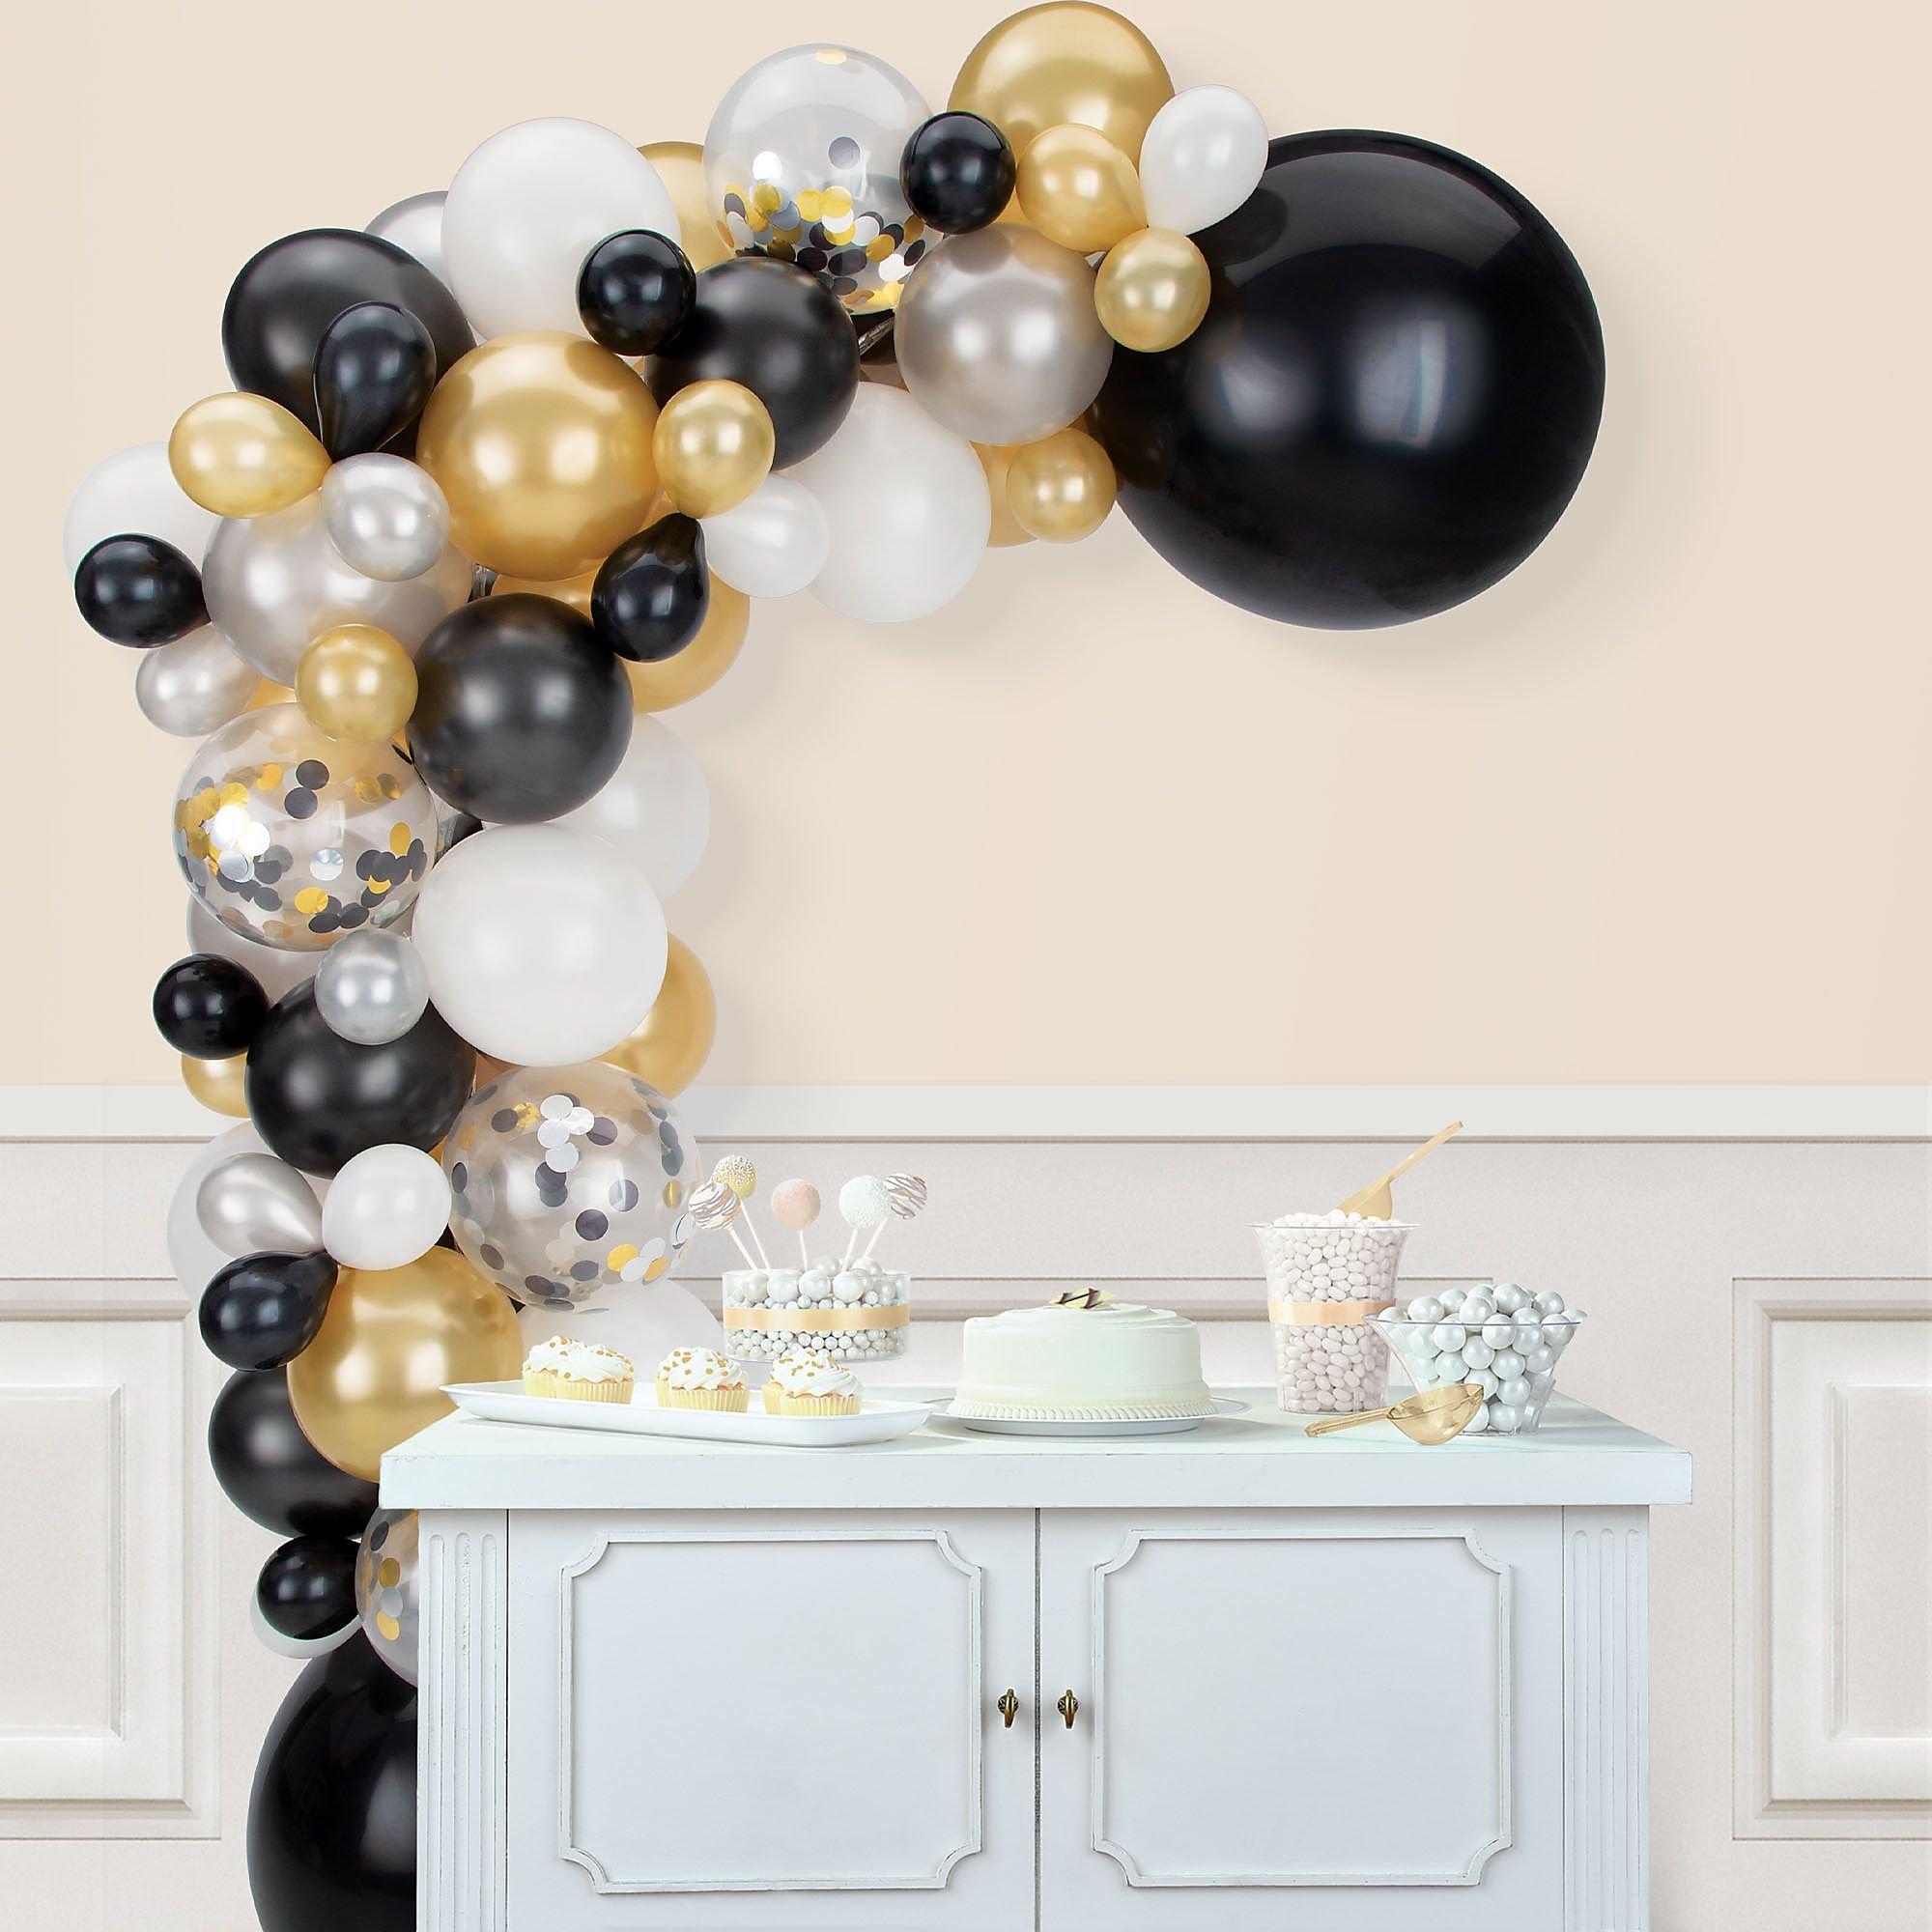 Black white and silver balloon garland